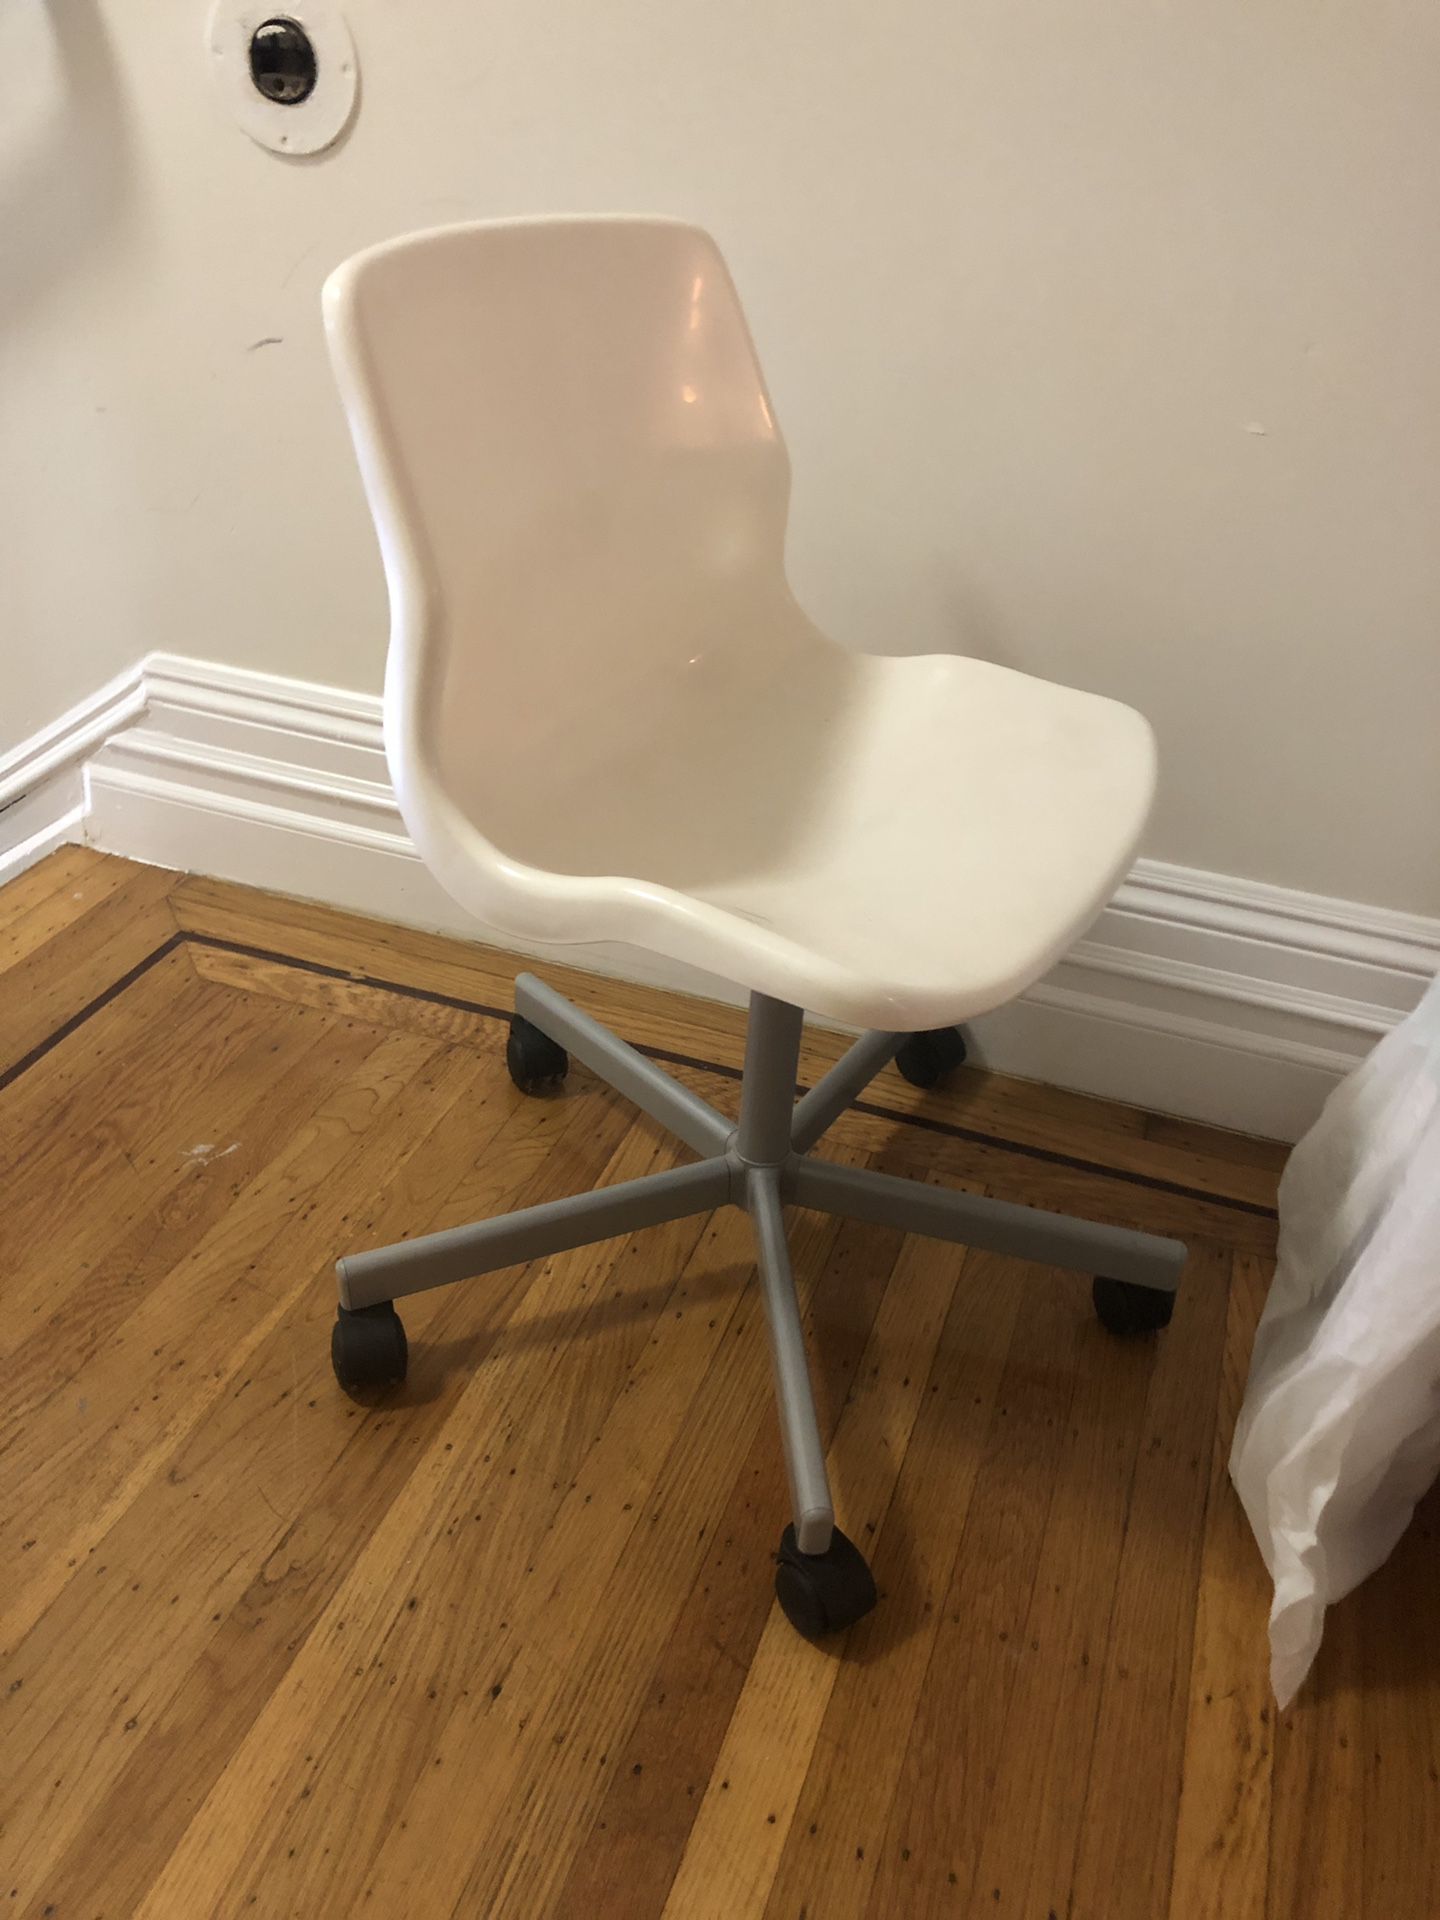 Small IKEA rolling desk chair